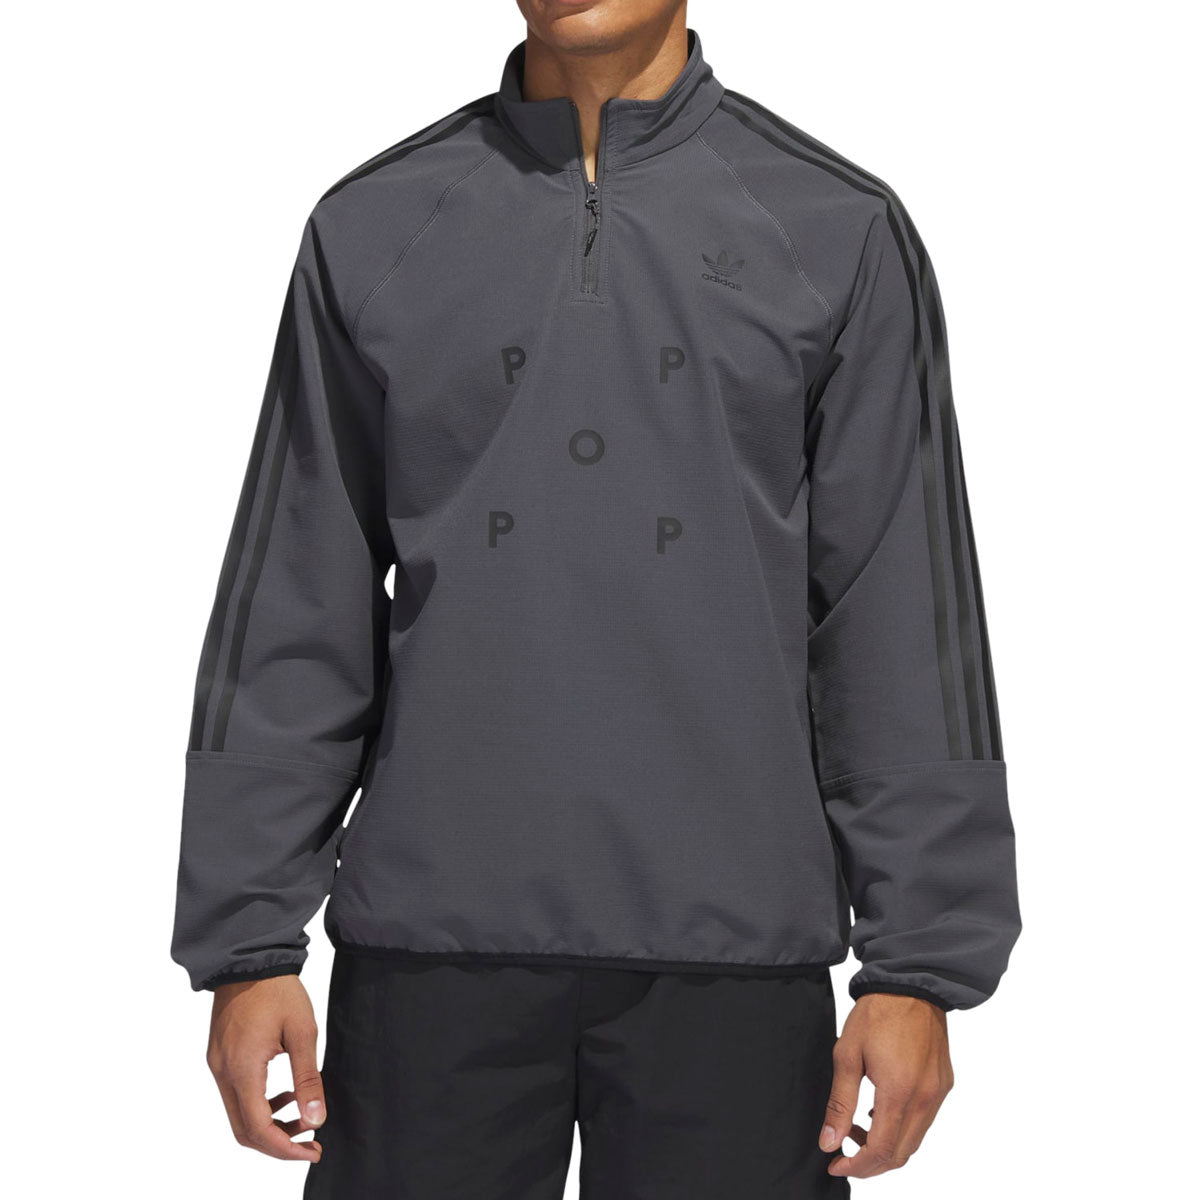 Adidas x Pop Thermal Long Sleeve Shirt - Grey/Black image 1